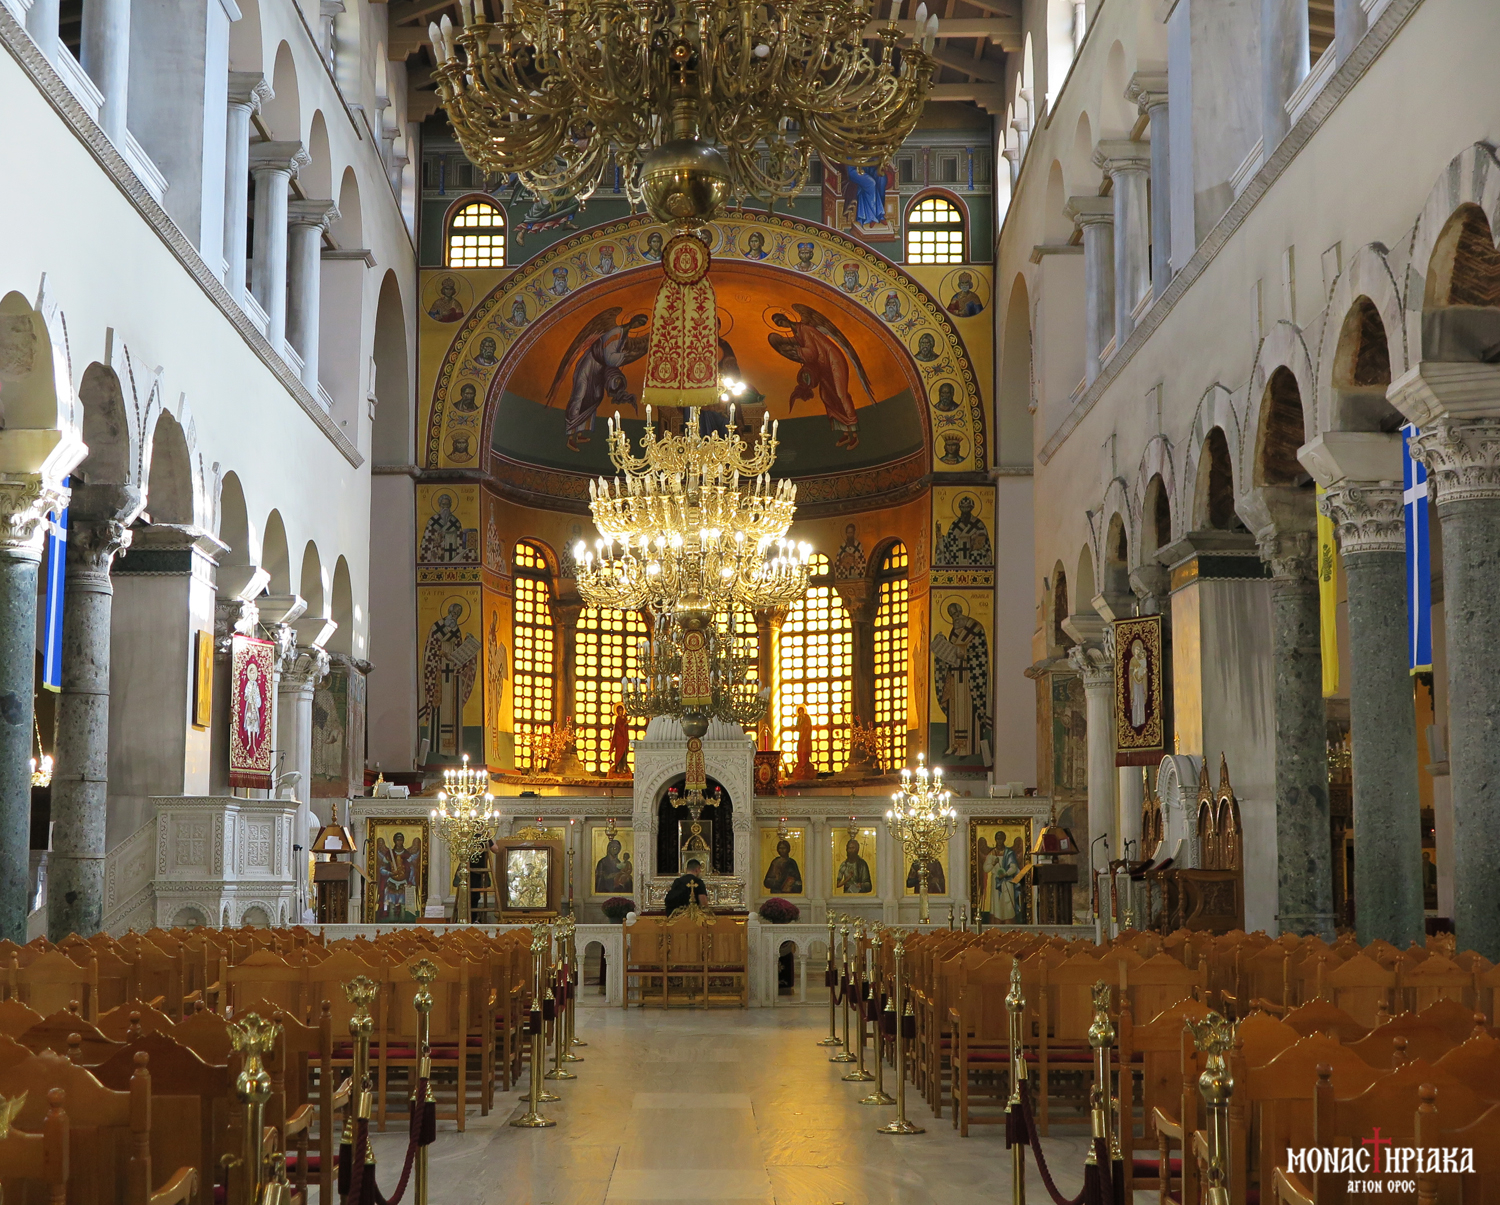 Holy Church of Saint Demetrios in Thessaloniki